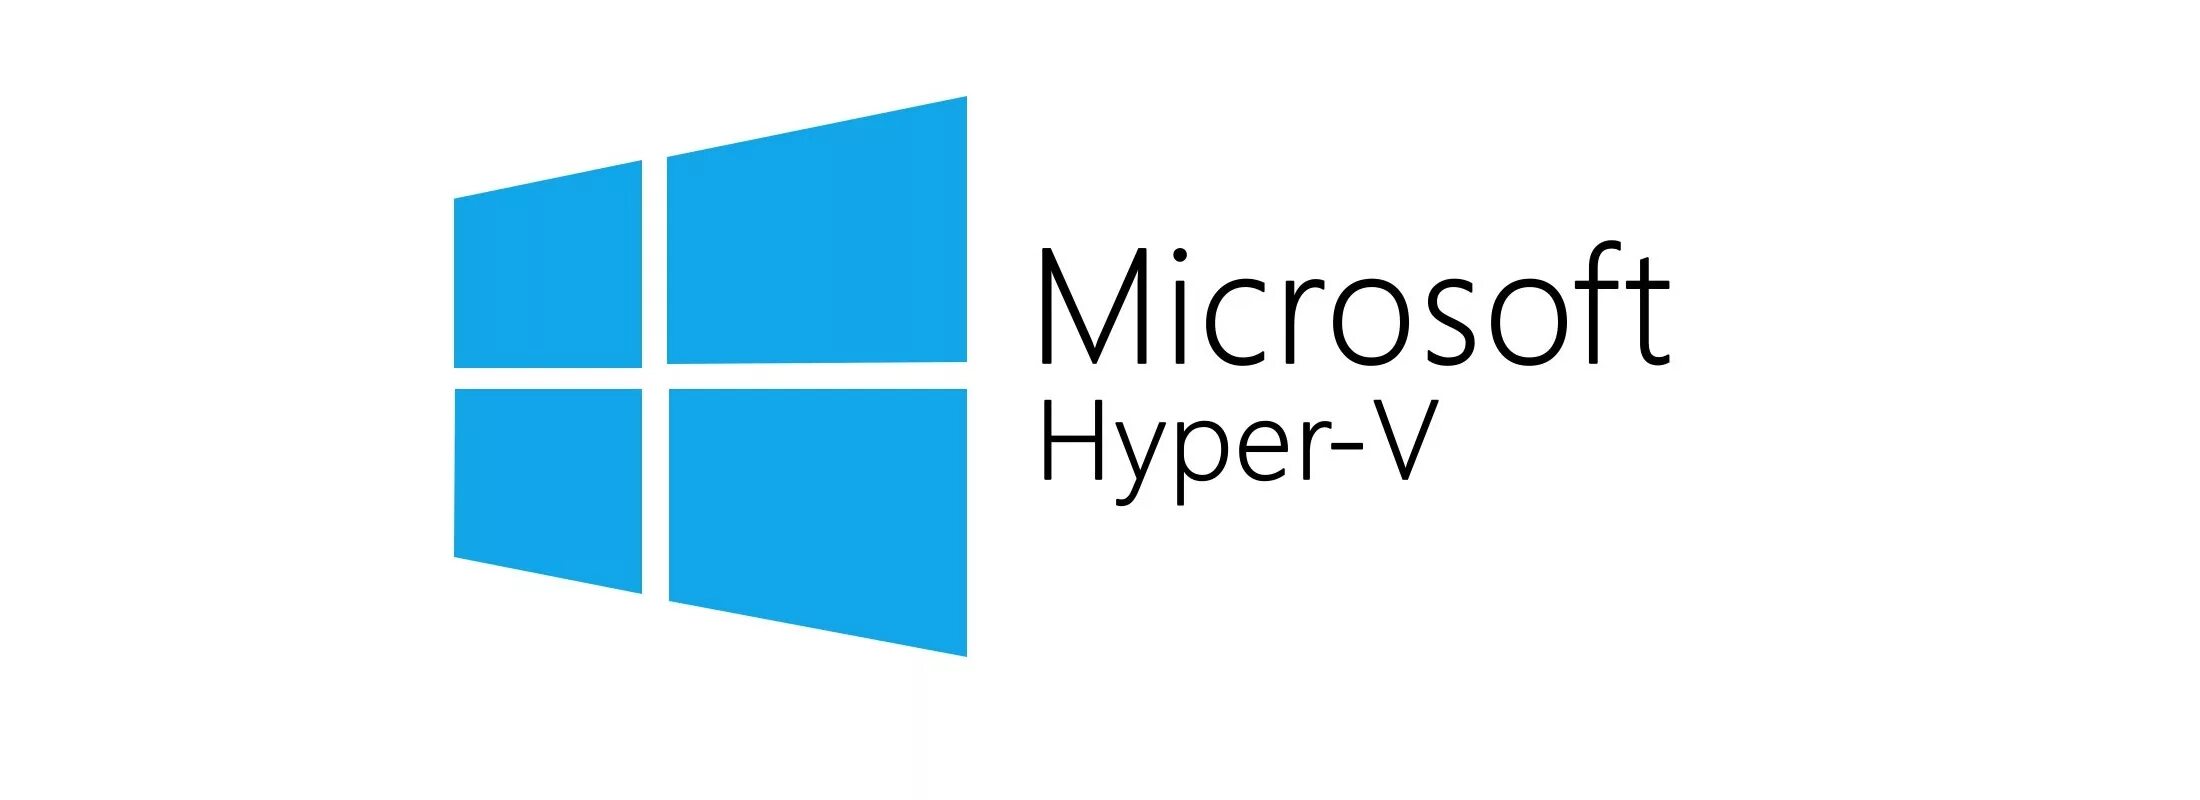 Microsoft Hyper-v. Сервер Hyper-v. Значок Hyper-v. Hyper v картинки.